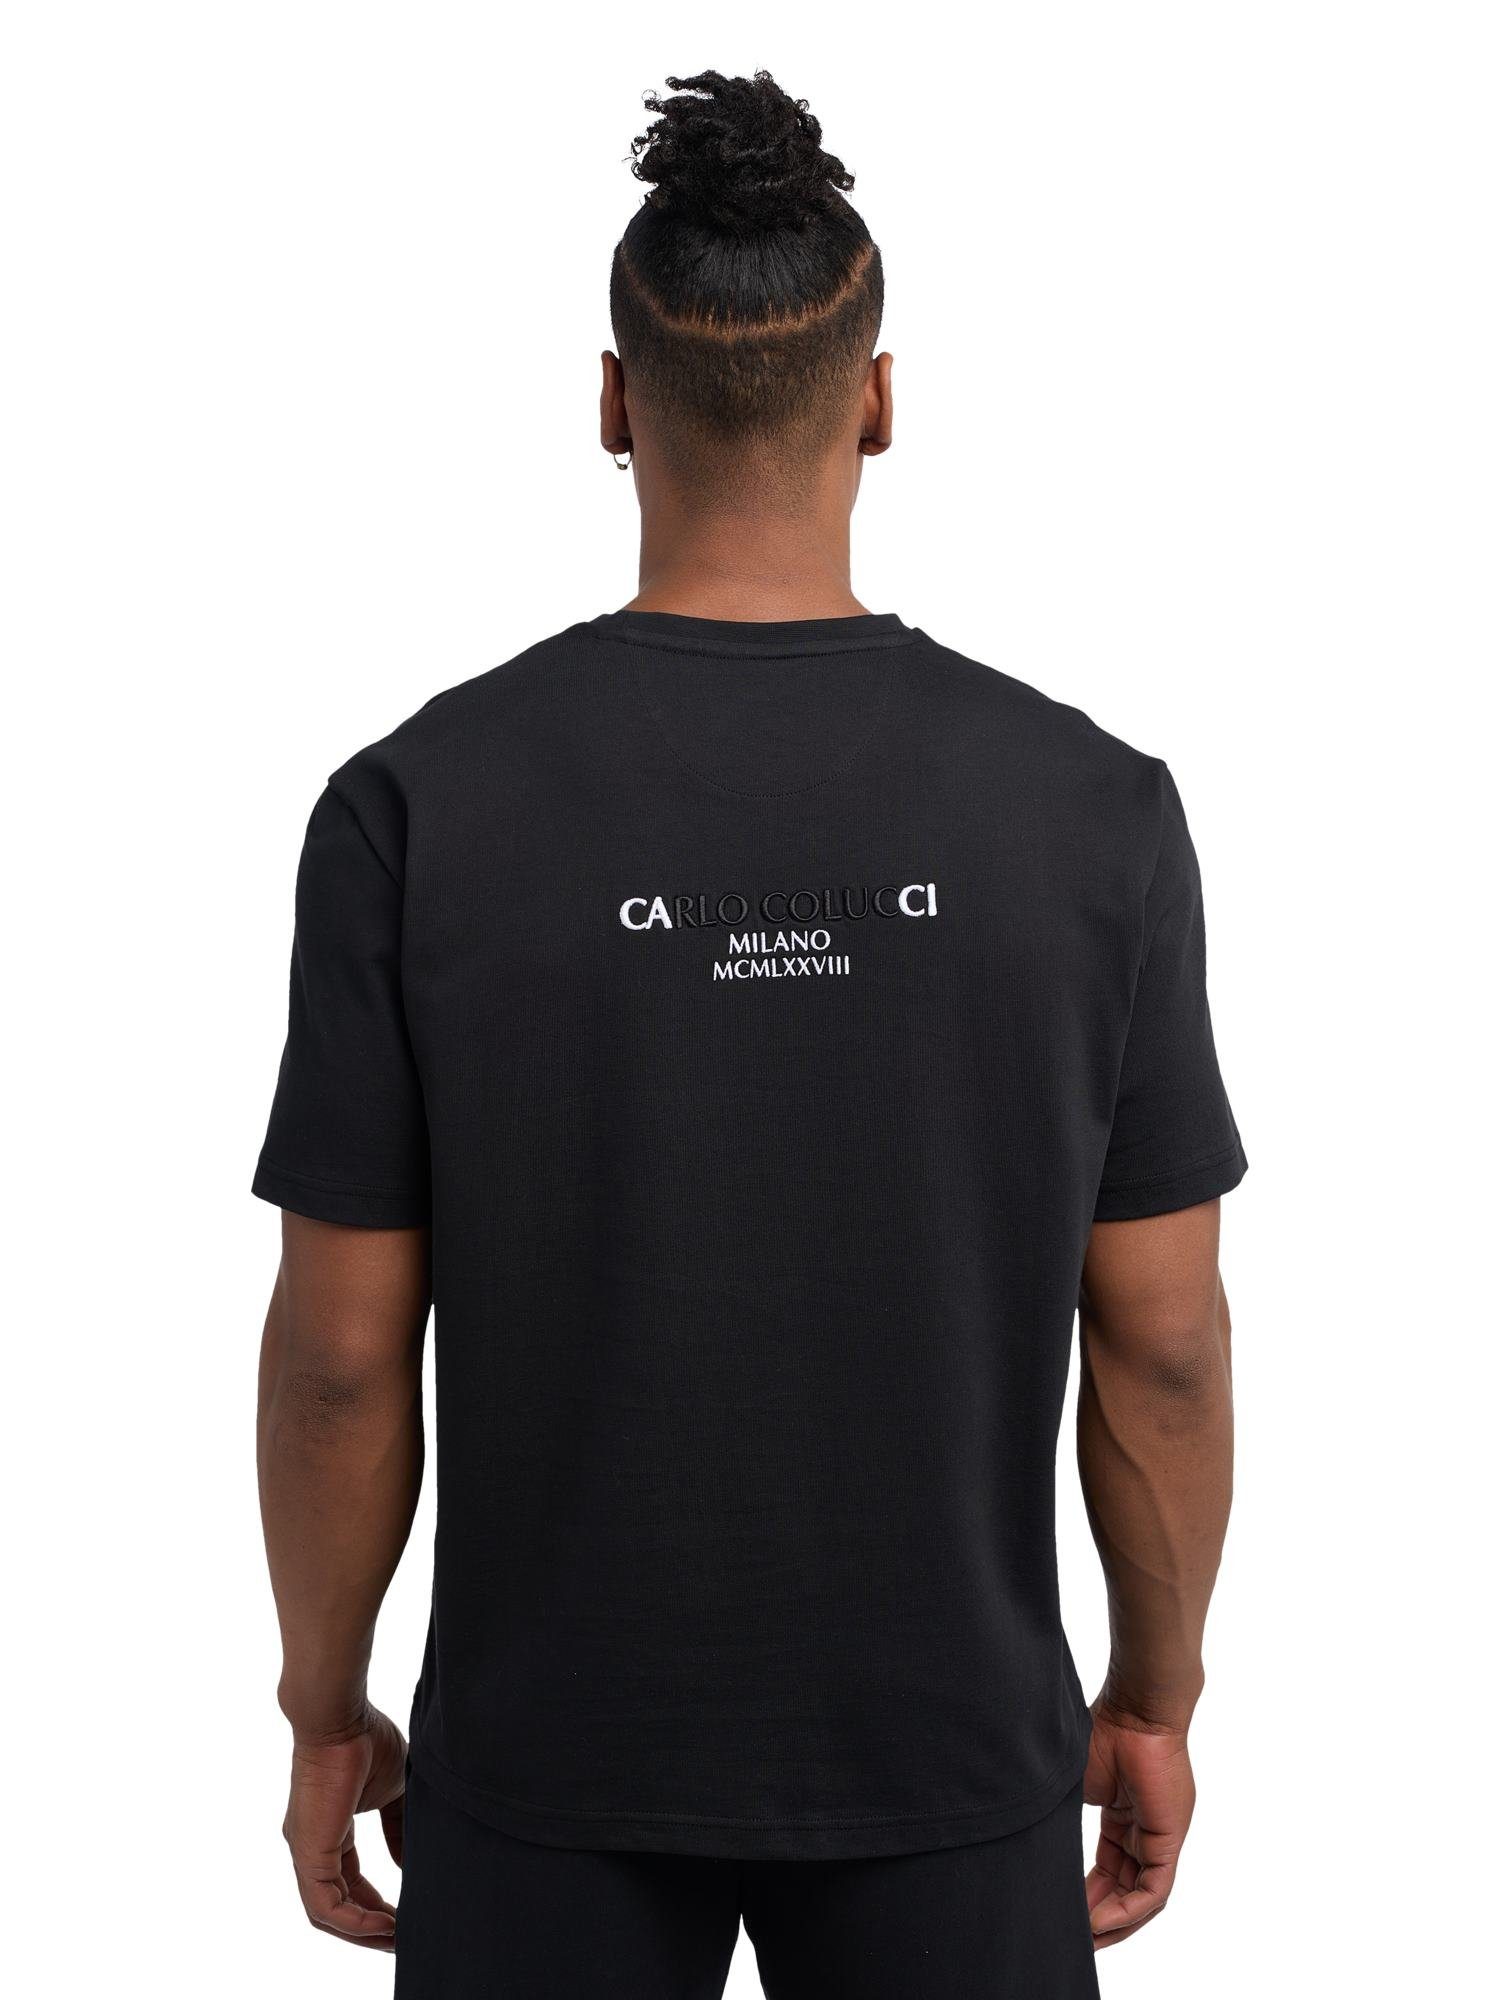 CARLO COLUCCI T-Shirt De Schwarz Pandis